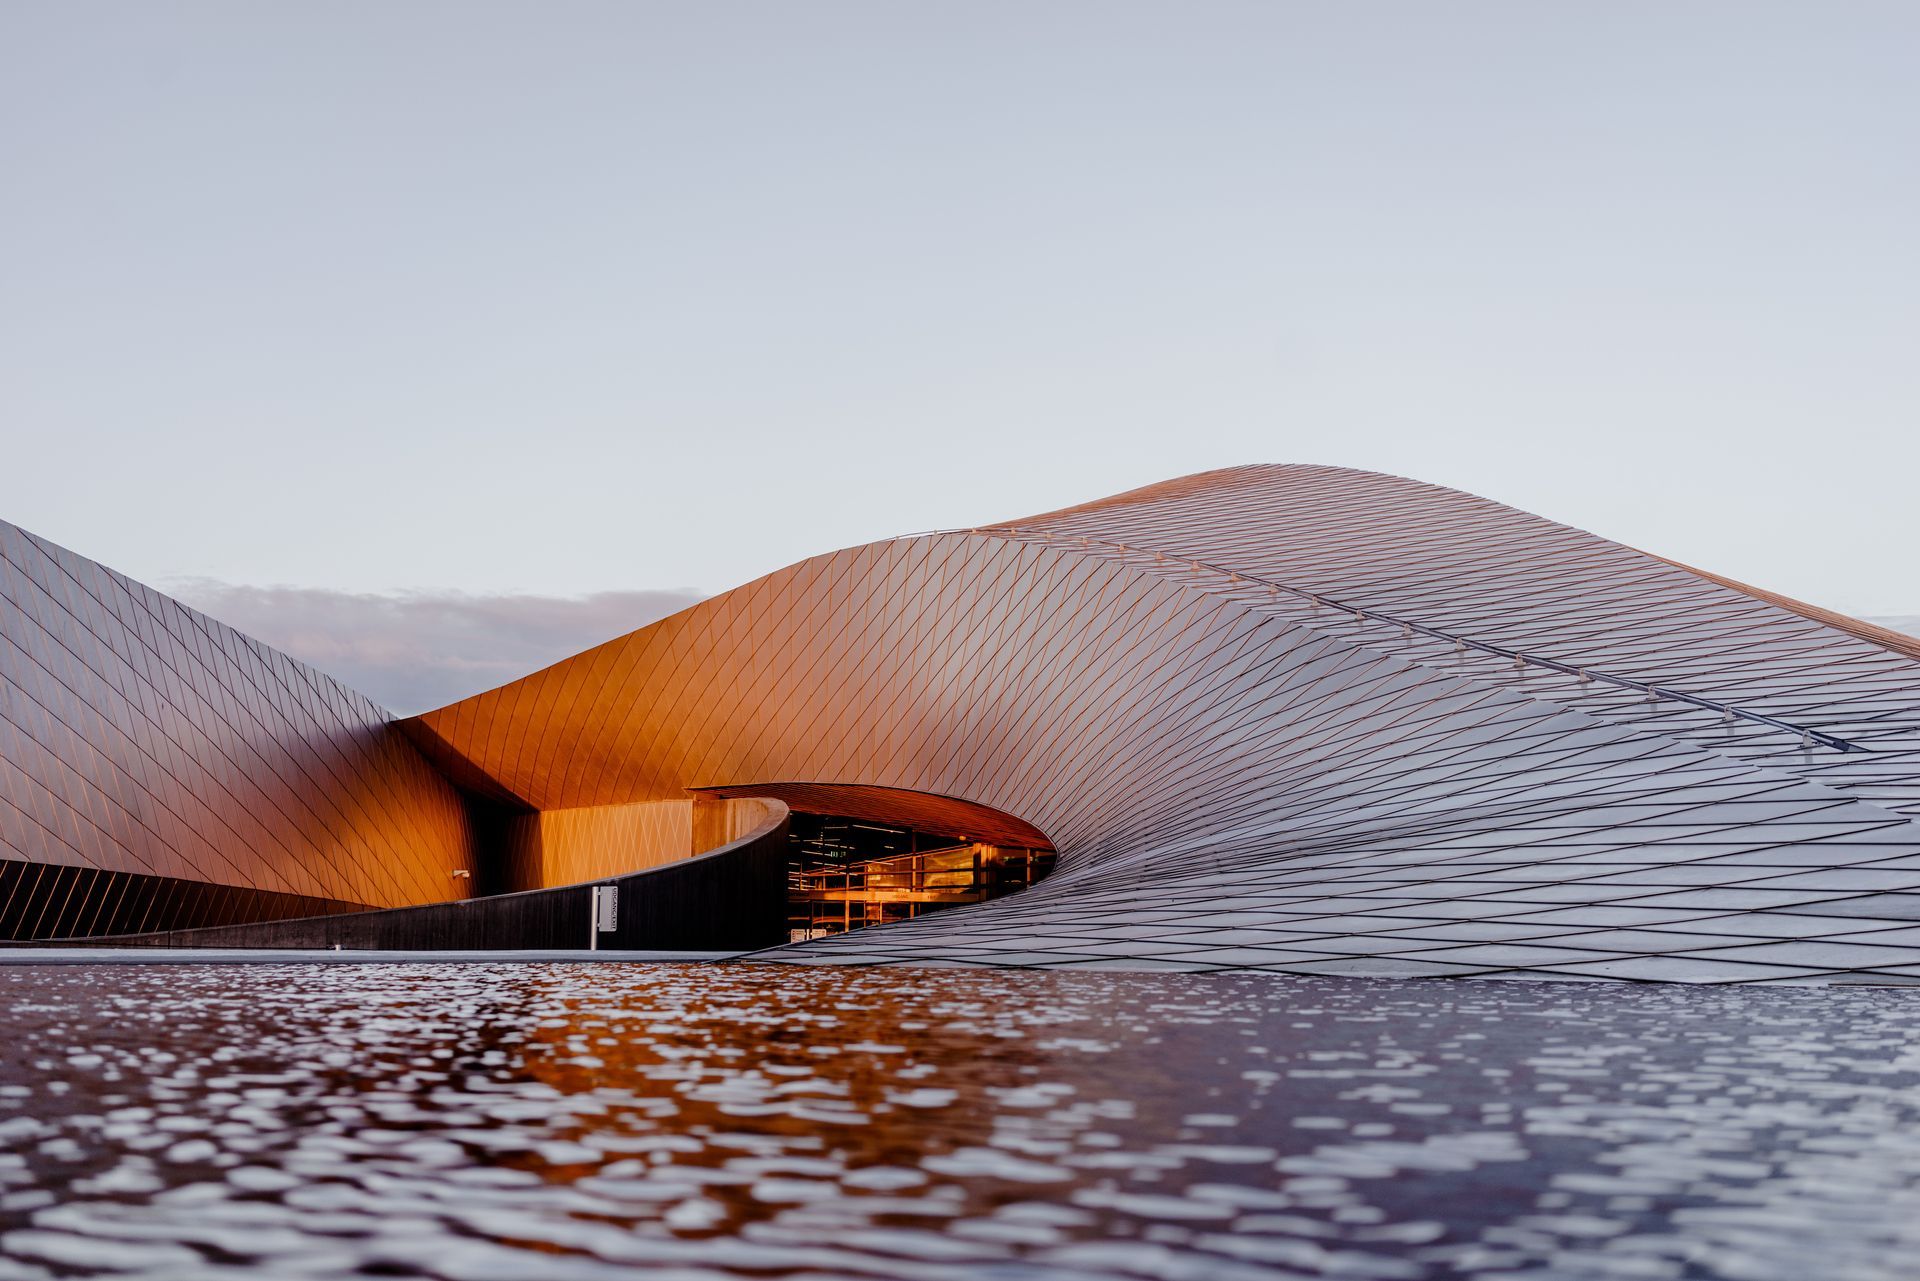 National Aquarium Denmark, Kastrup, Denmark architecture with light sky and orange light